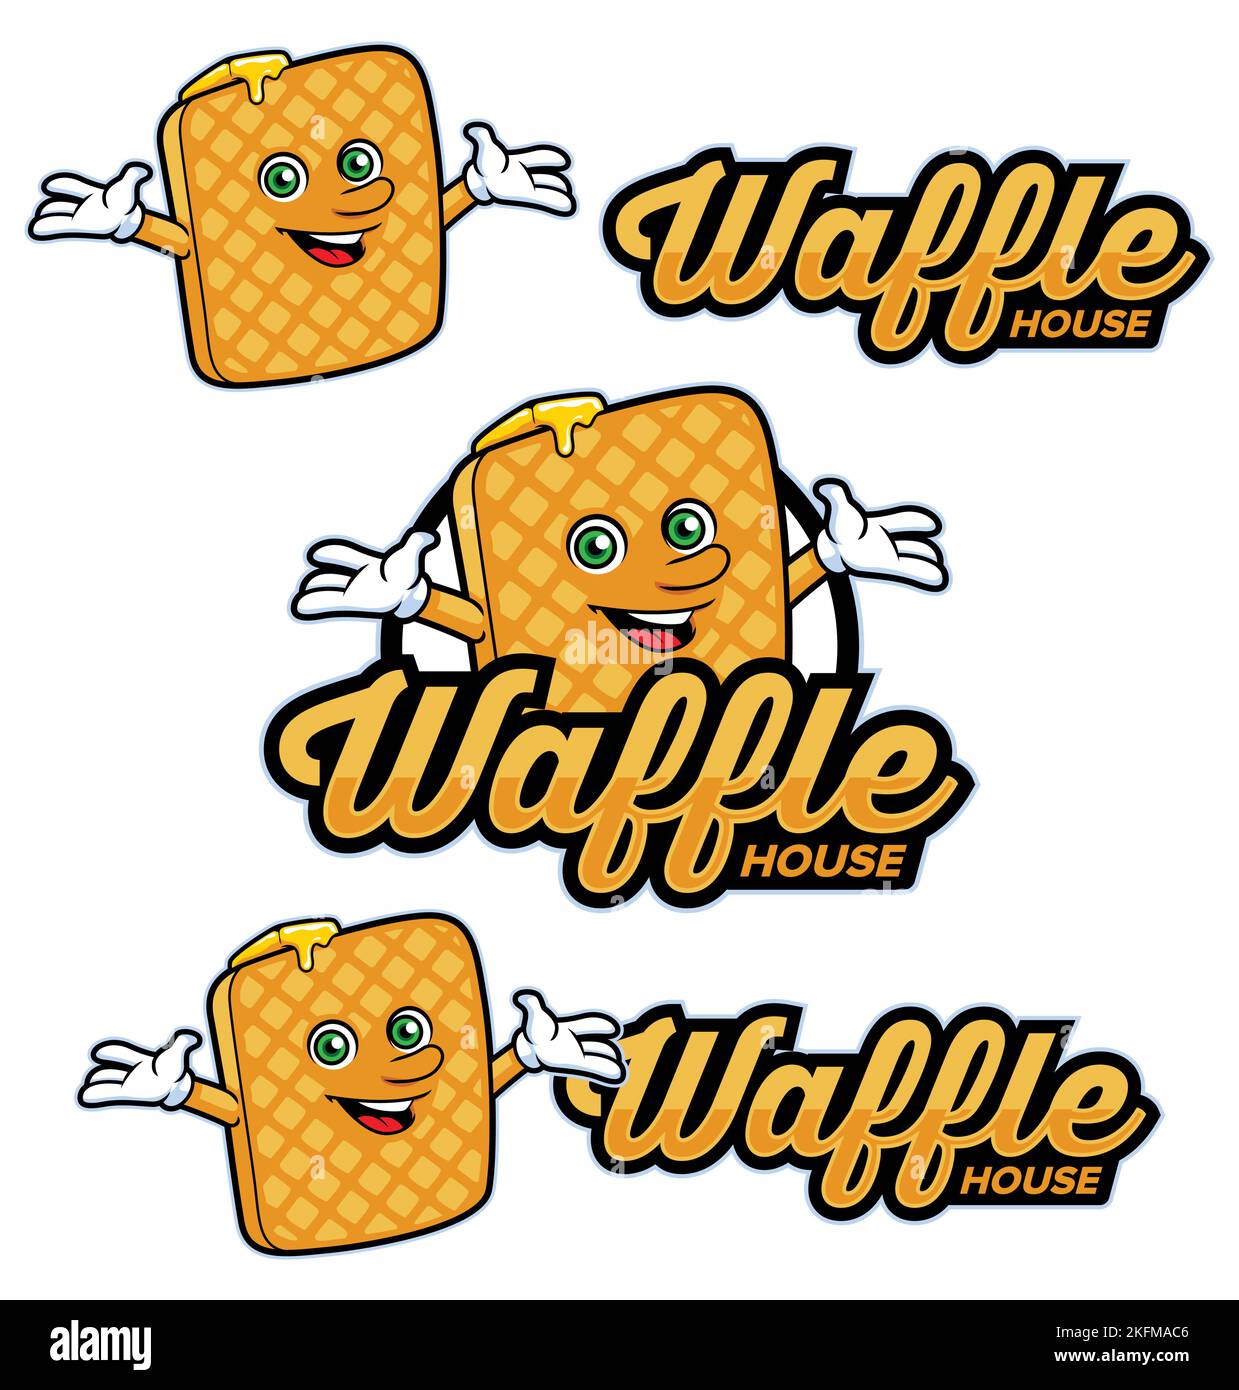 Waffle House Mascot Stock Vector